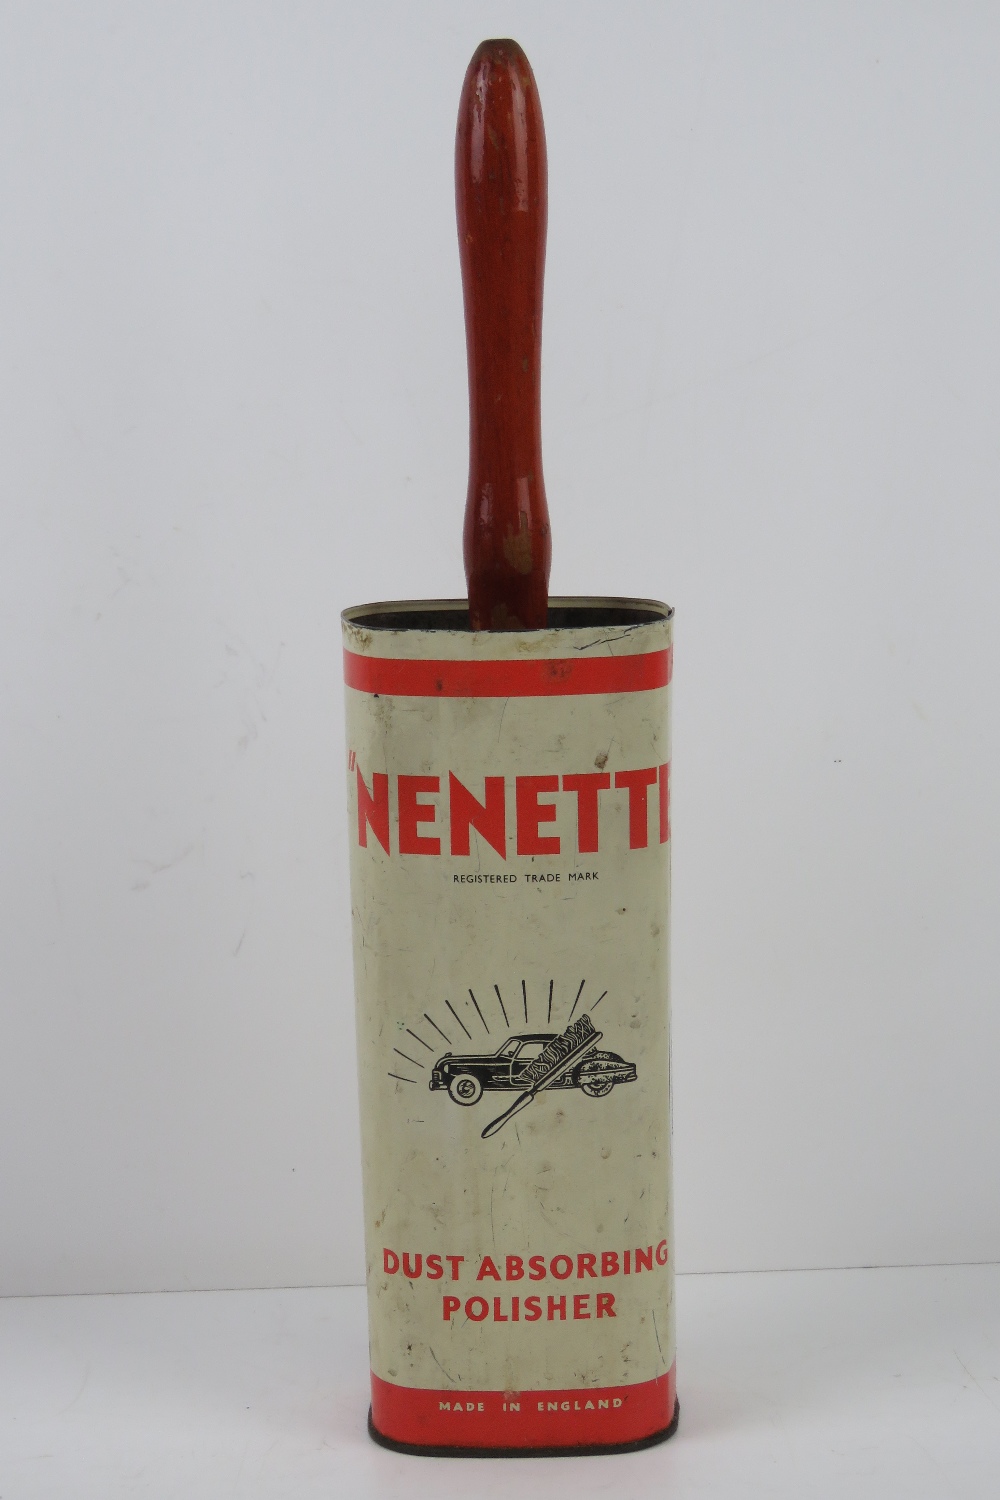 A vintage Nenette dust absorbing polishe